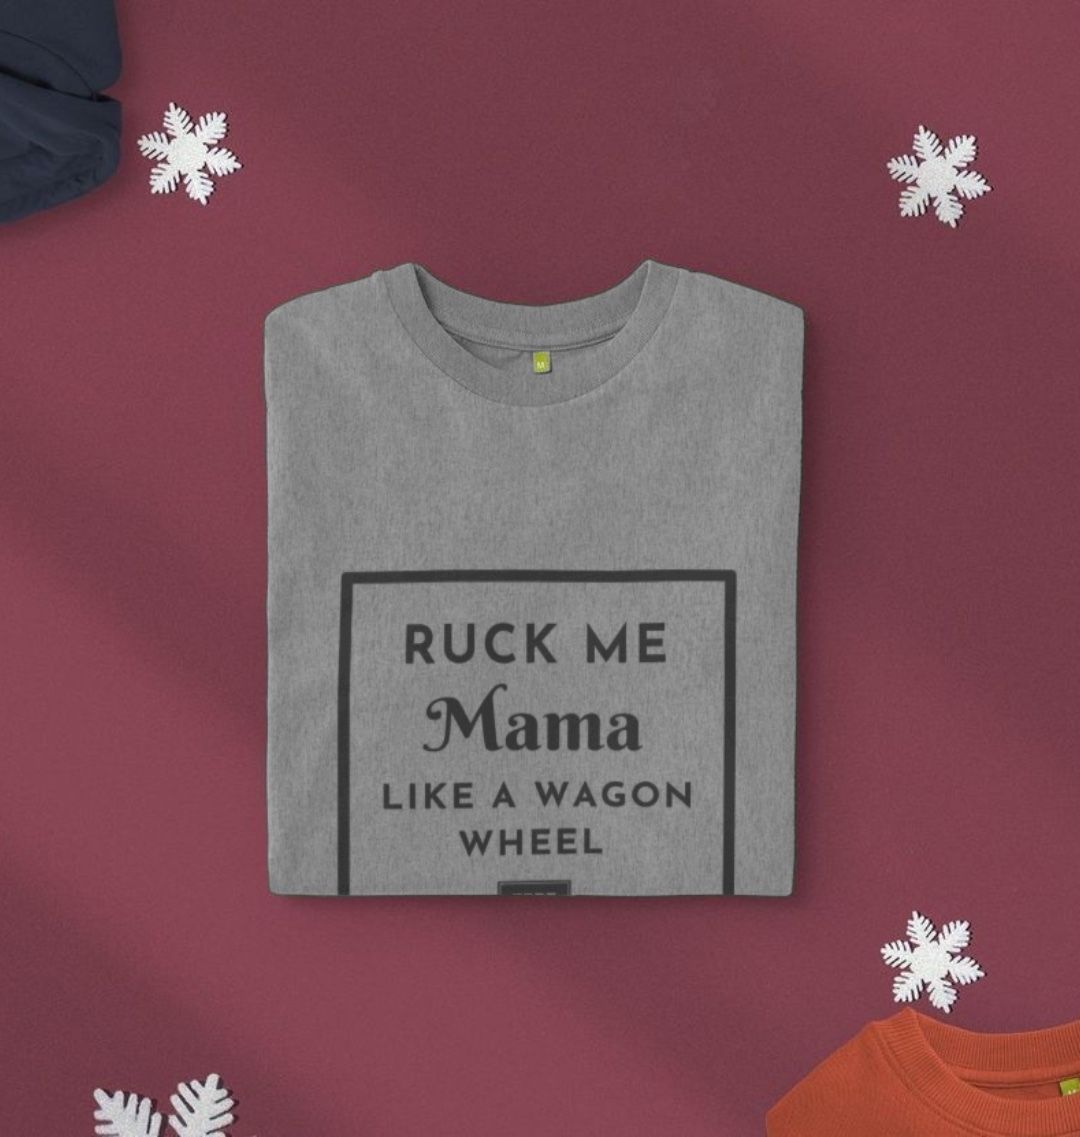 Adults “Ruck me” T-Shirt